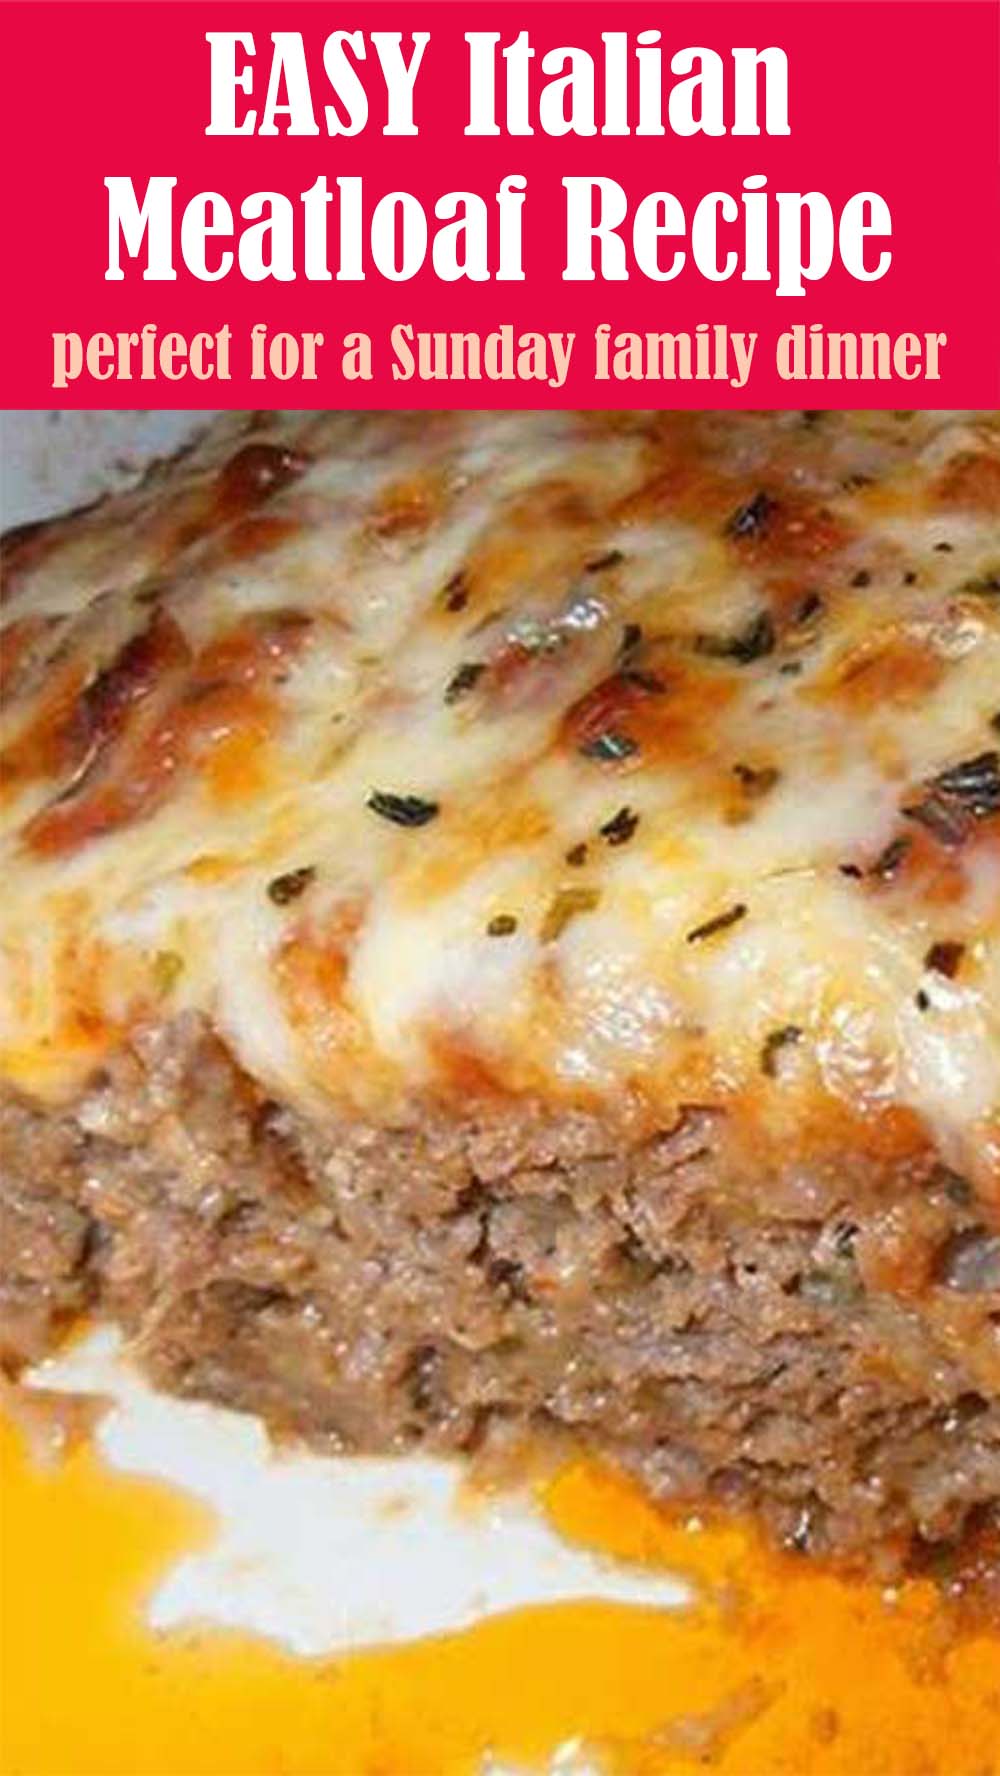 EASY Italian Meatloaf Recipe